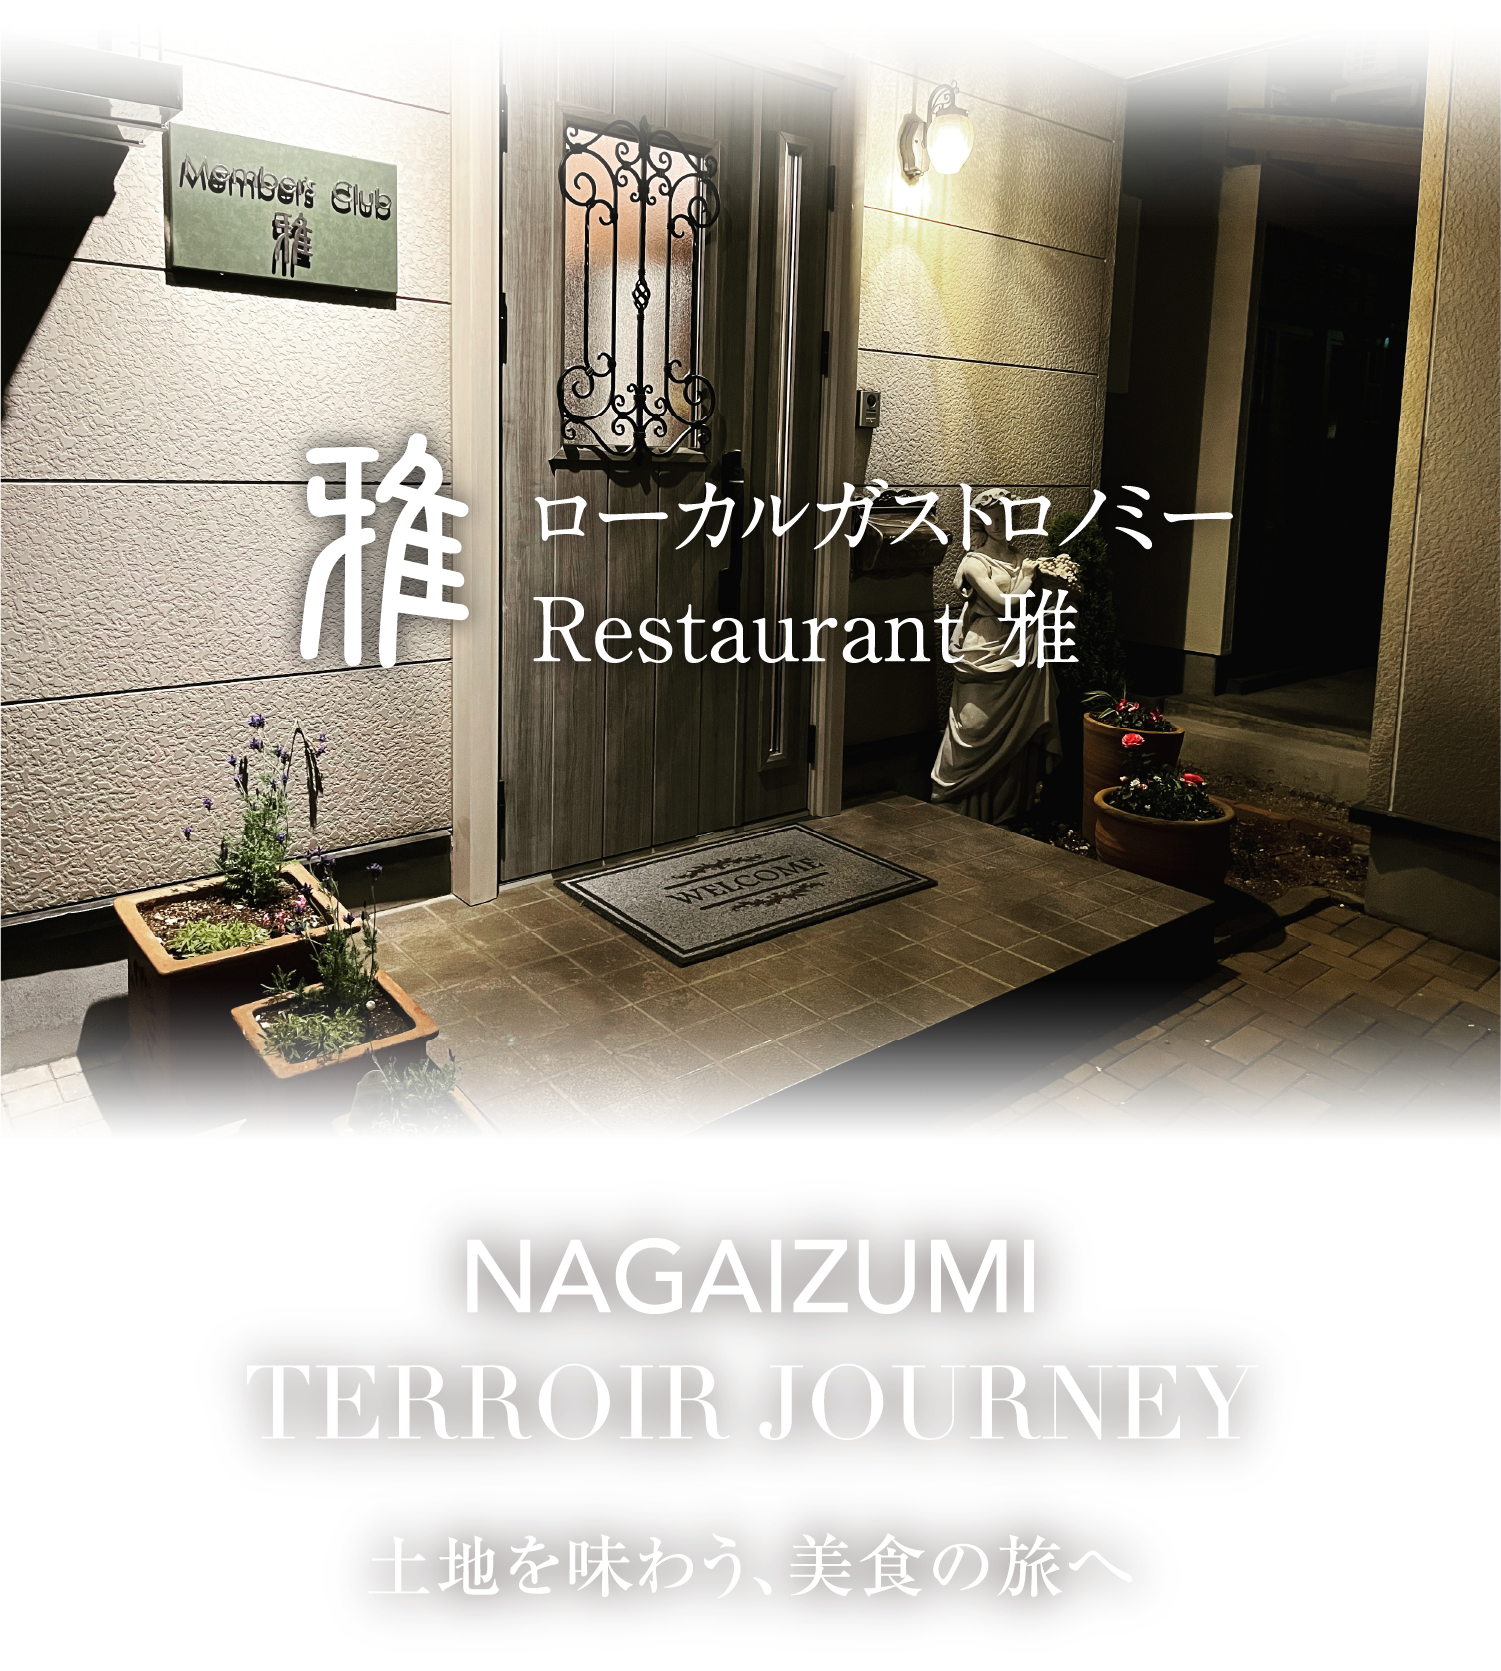 NAGAIZUMI TERRORIR JOURNEY 土地を味わう美食の旅へ